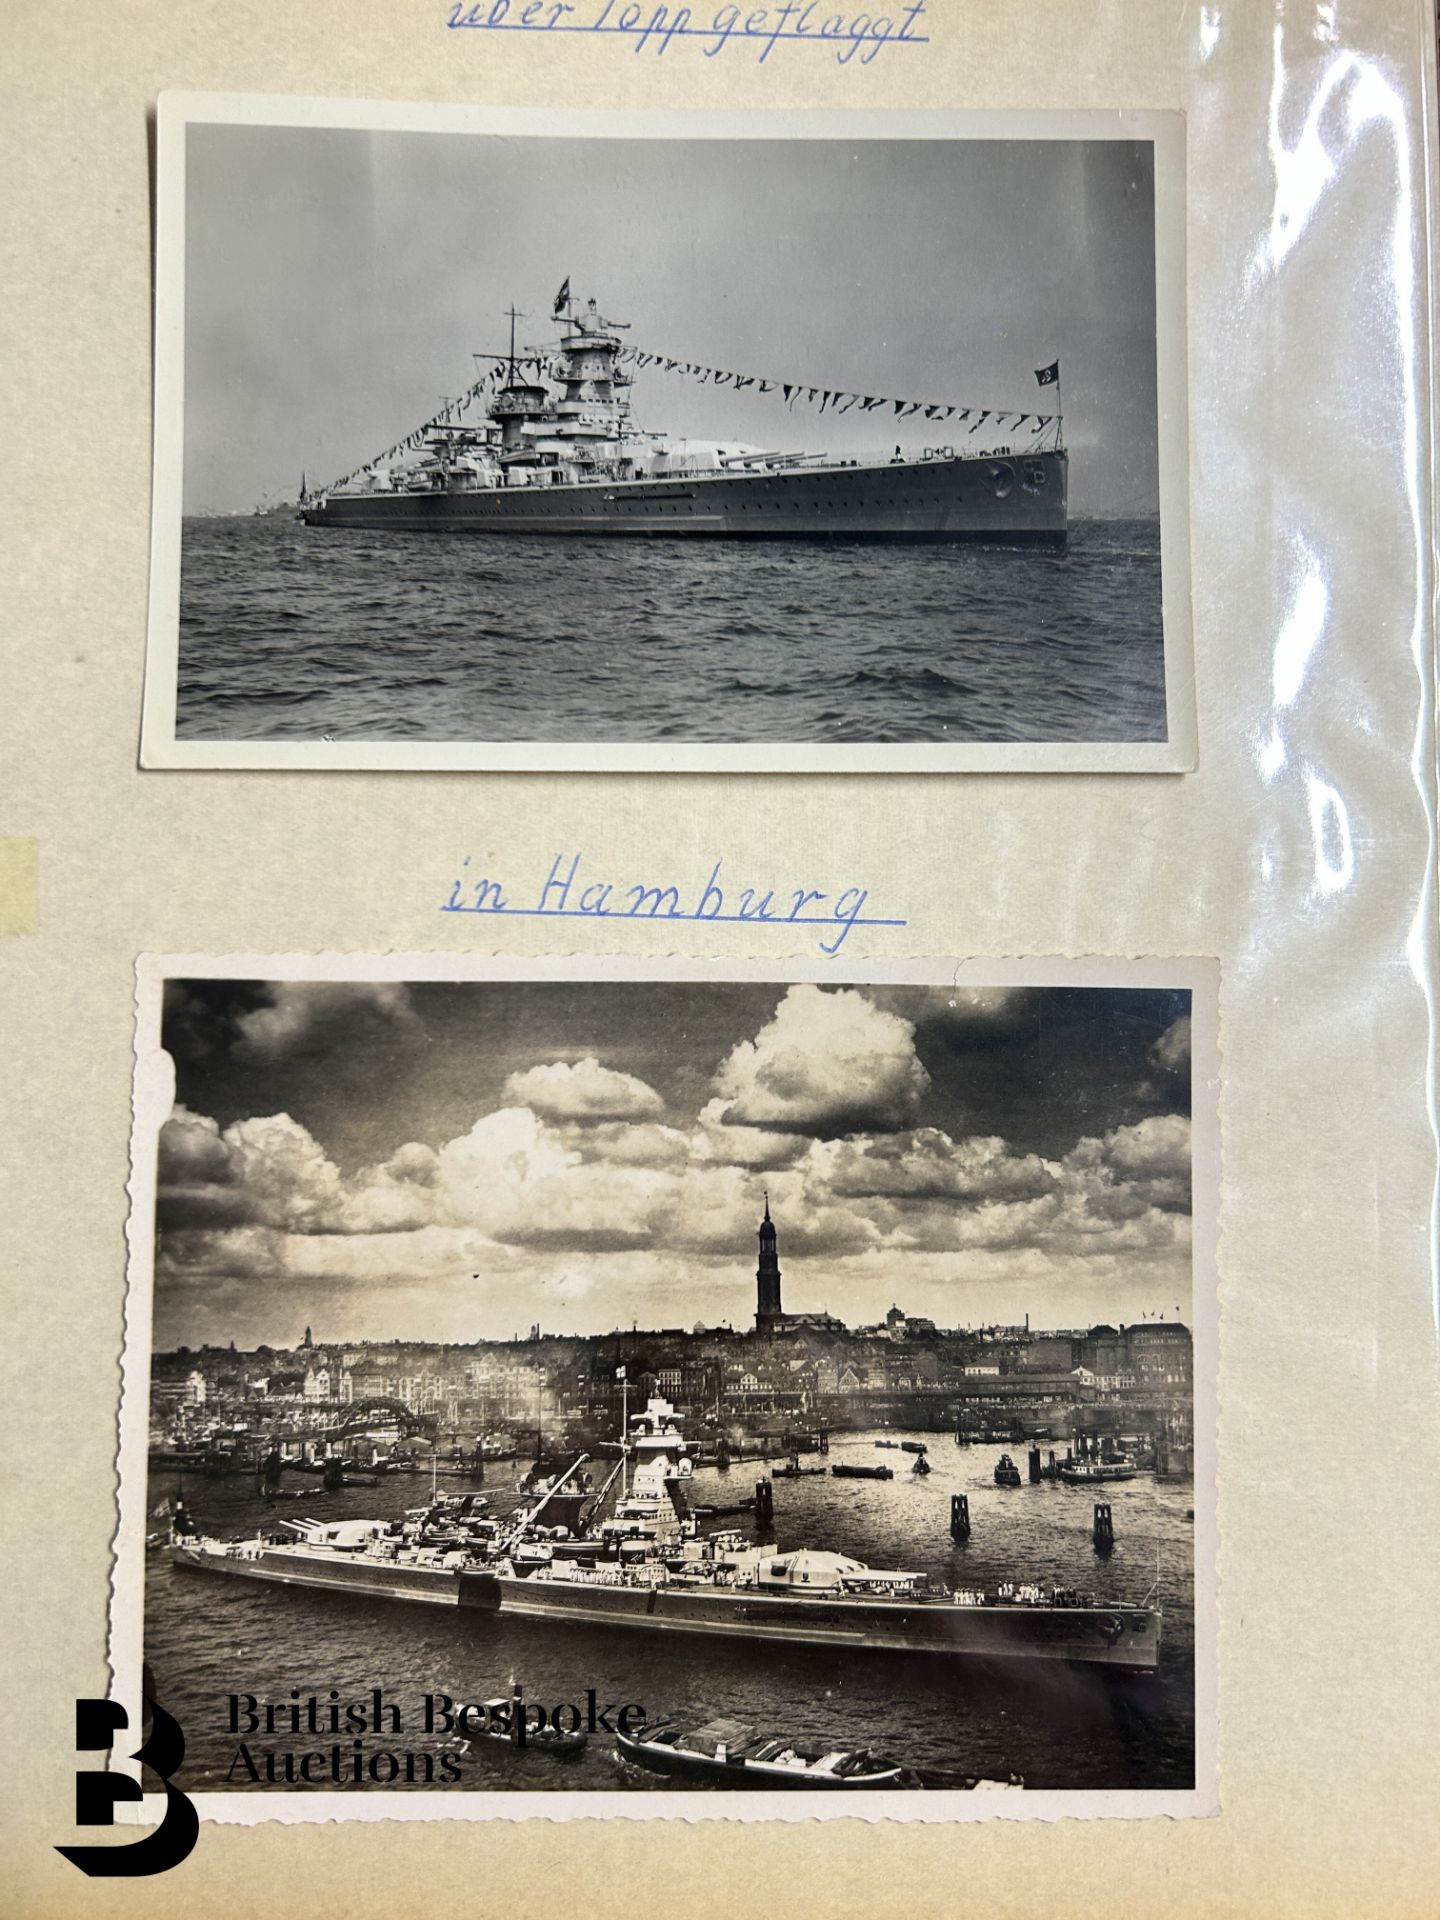 Graf Spee (Pocket Battleship) Interest, incl. Photographs, Documents, Miscellanea - Image 76 of 126